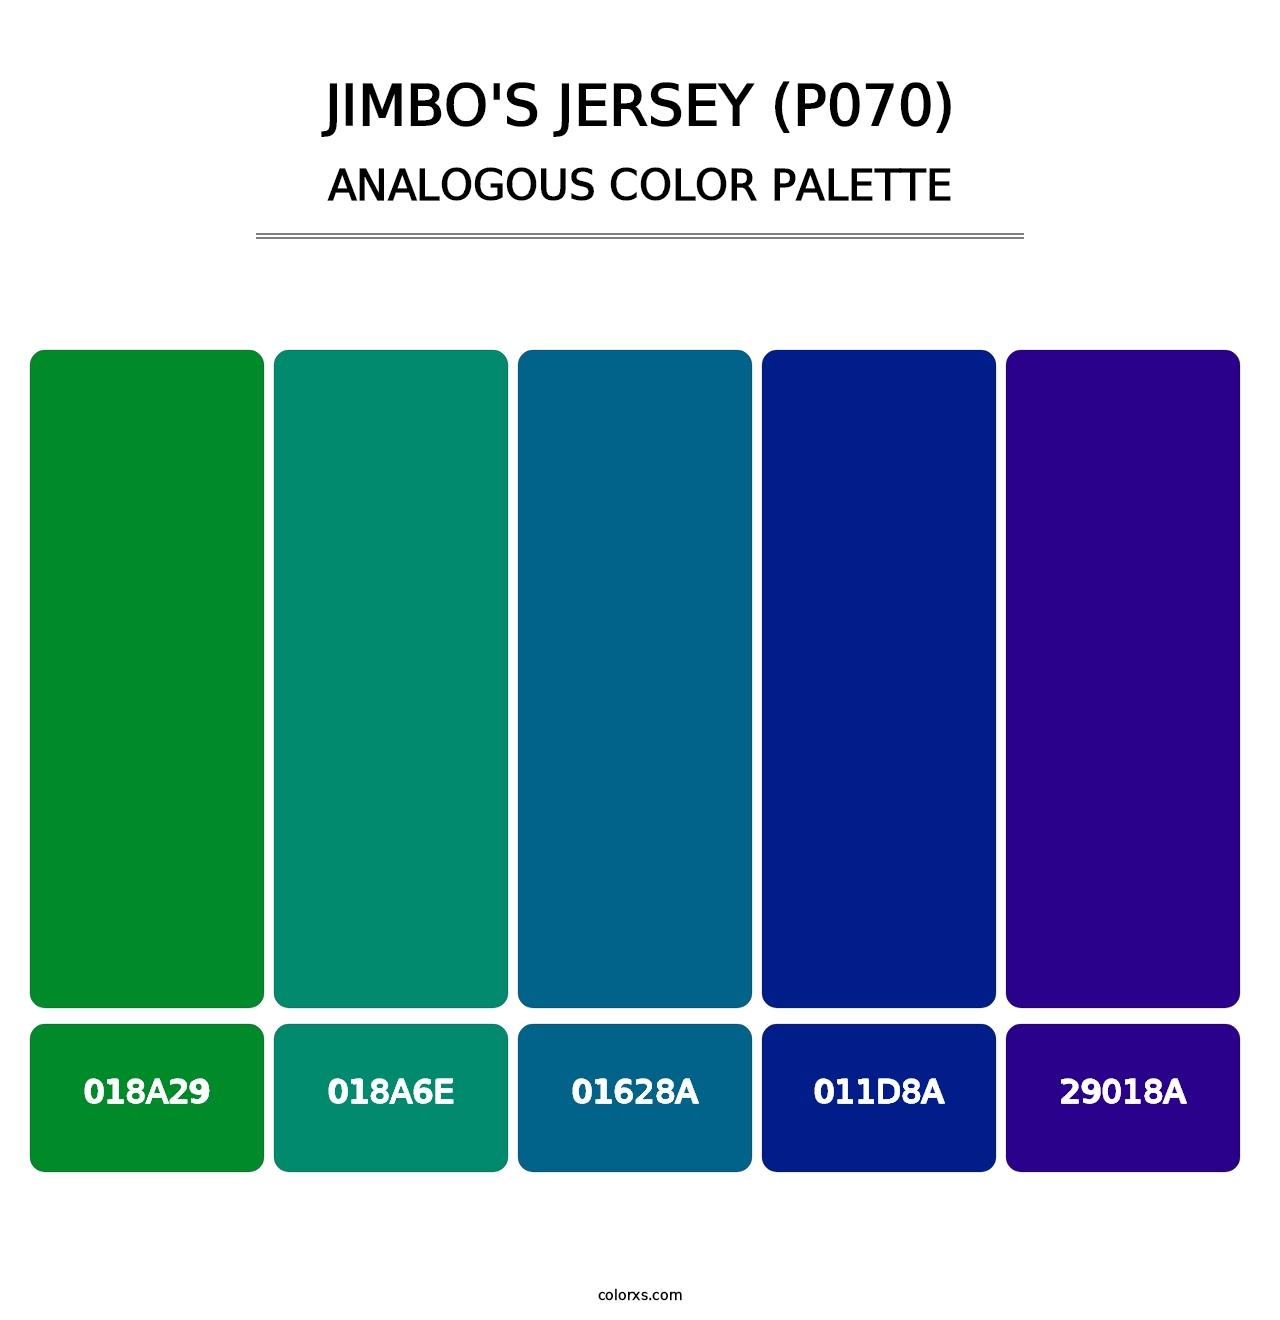 Jimbo's Jersey (P070) - Analogous Color Palette